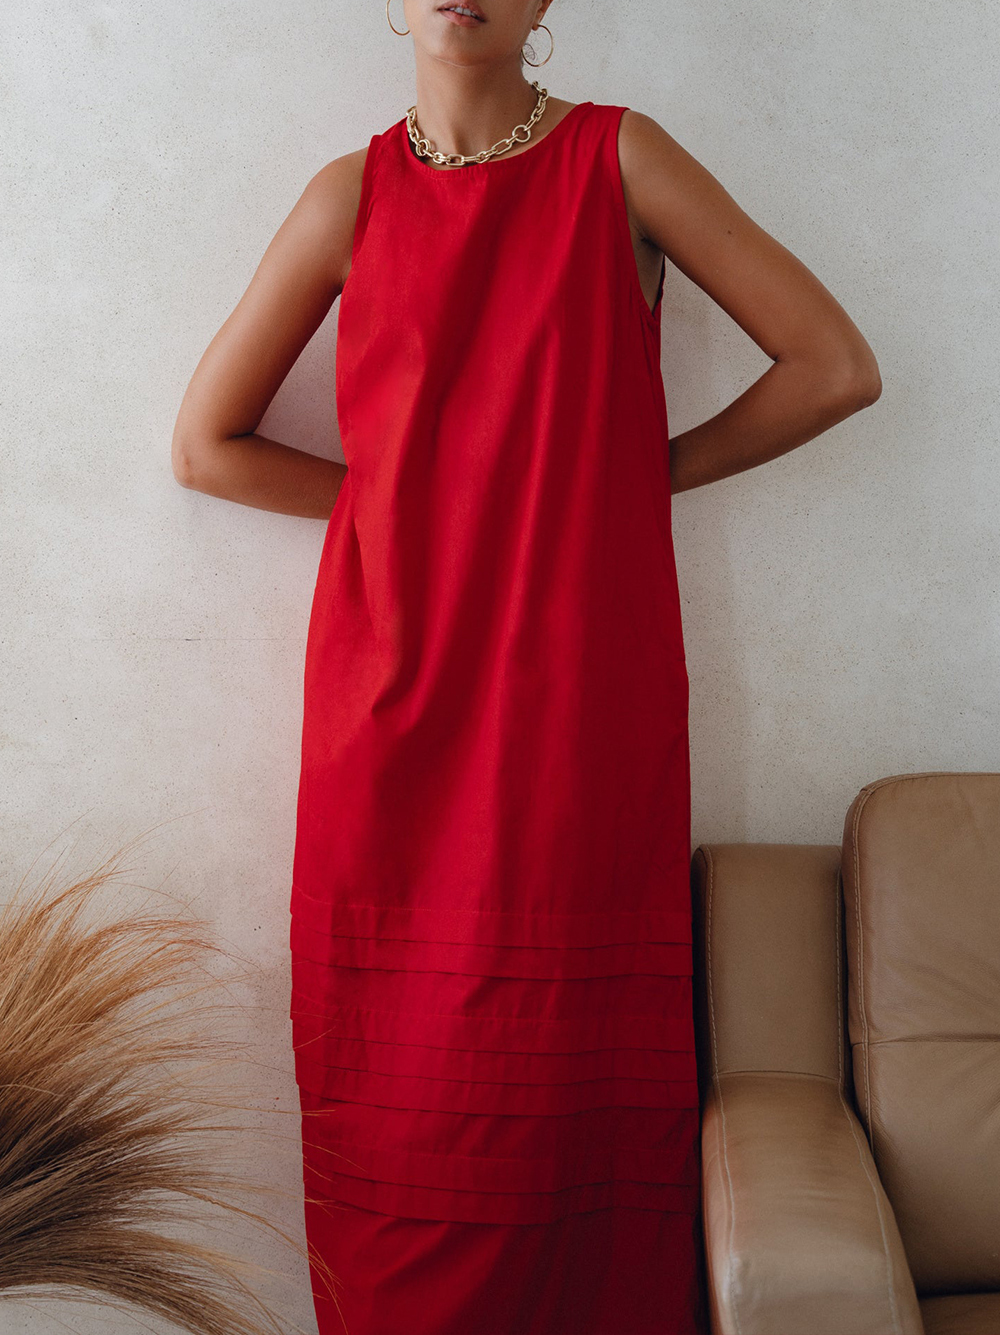 COZINEN Women's Solid Color Round Neck Sleeveless Dress